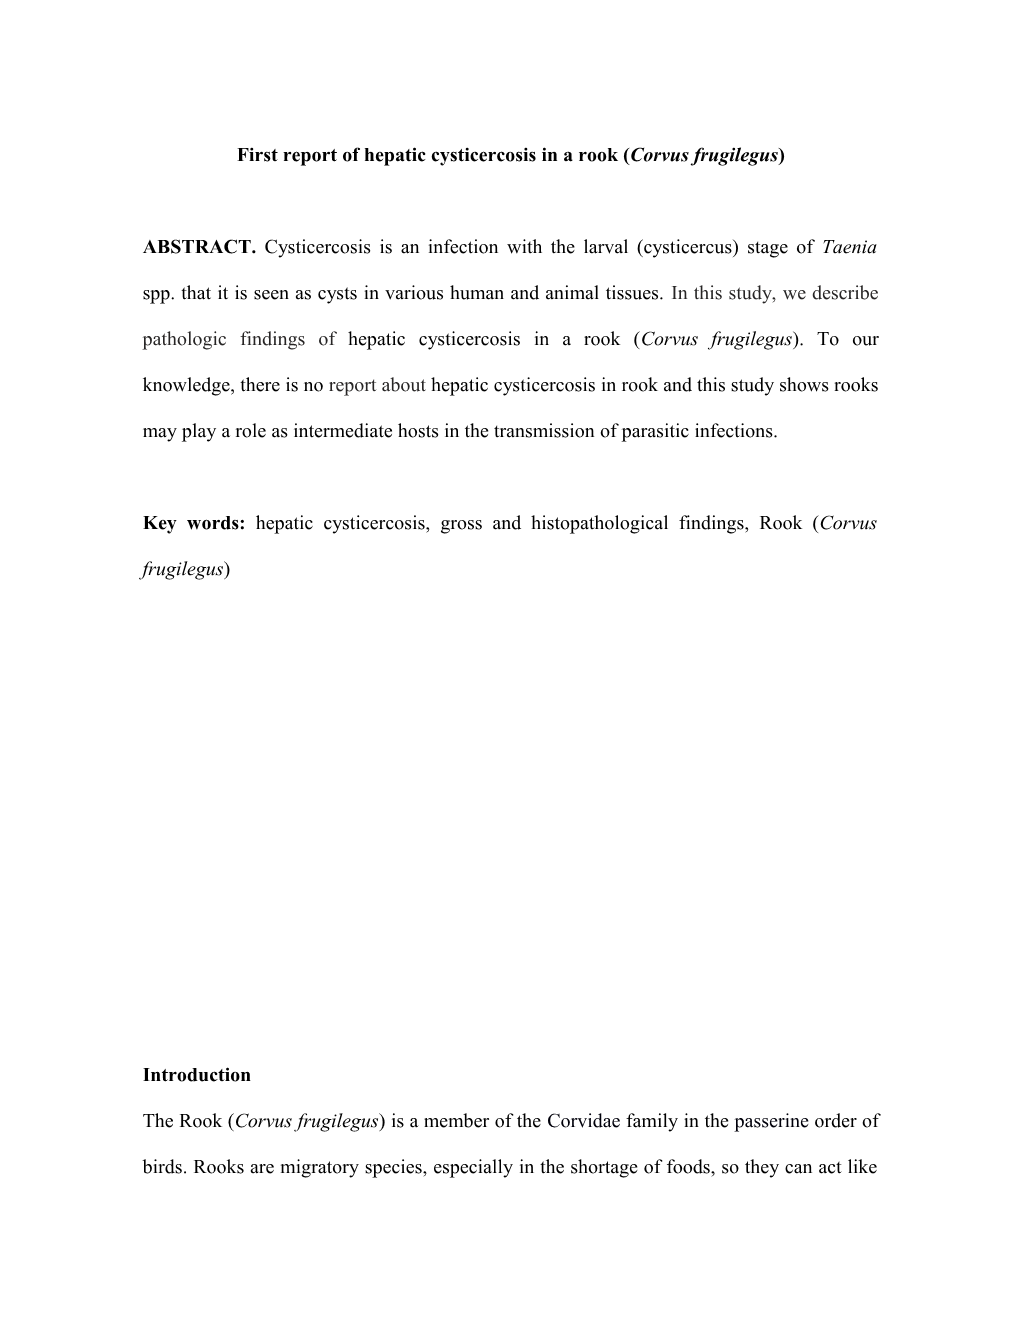 First Report of Hepatic Cysticercosis in a Rook (Corvusfrugilegus)